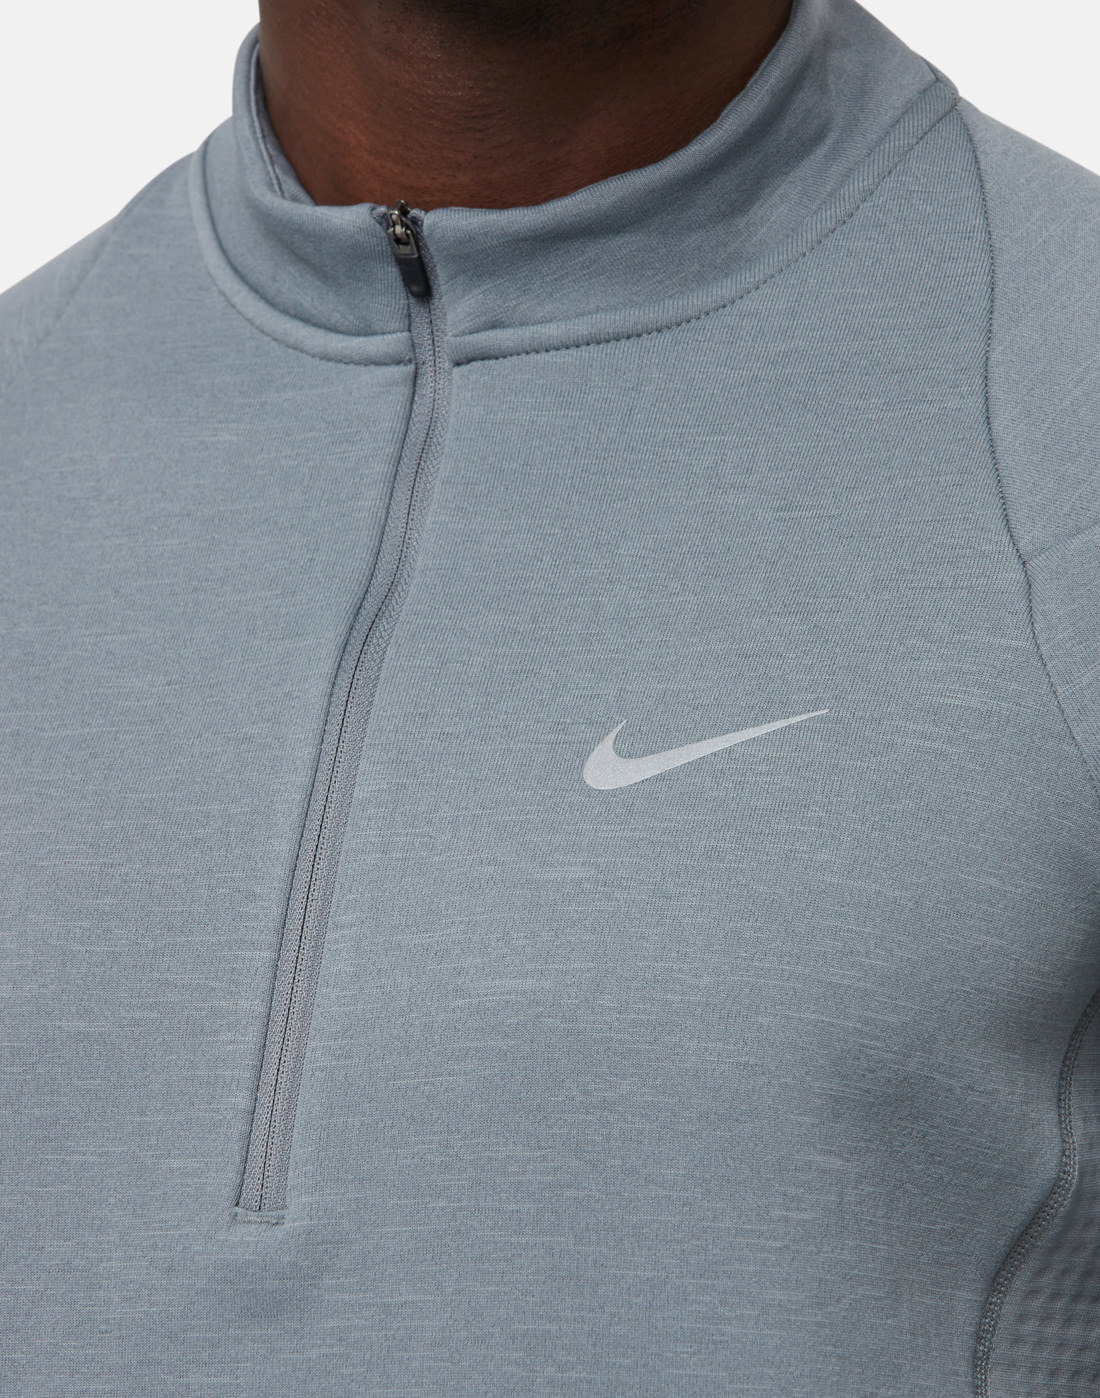 Nike Mens Repel Element Half Zip Top - Grey | Life Style Sports IE